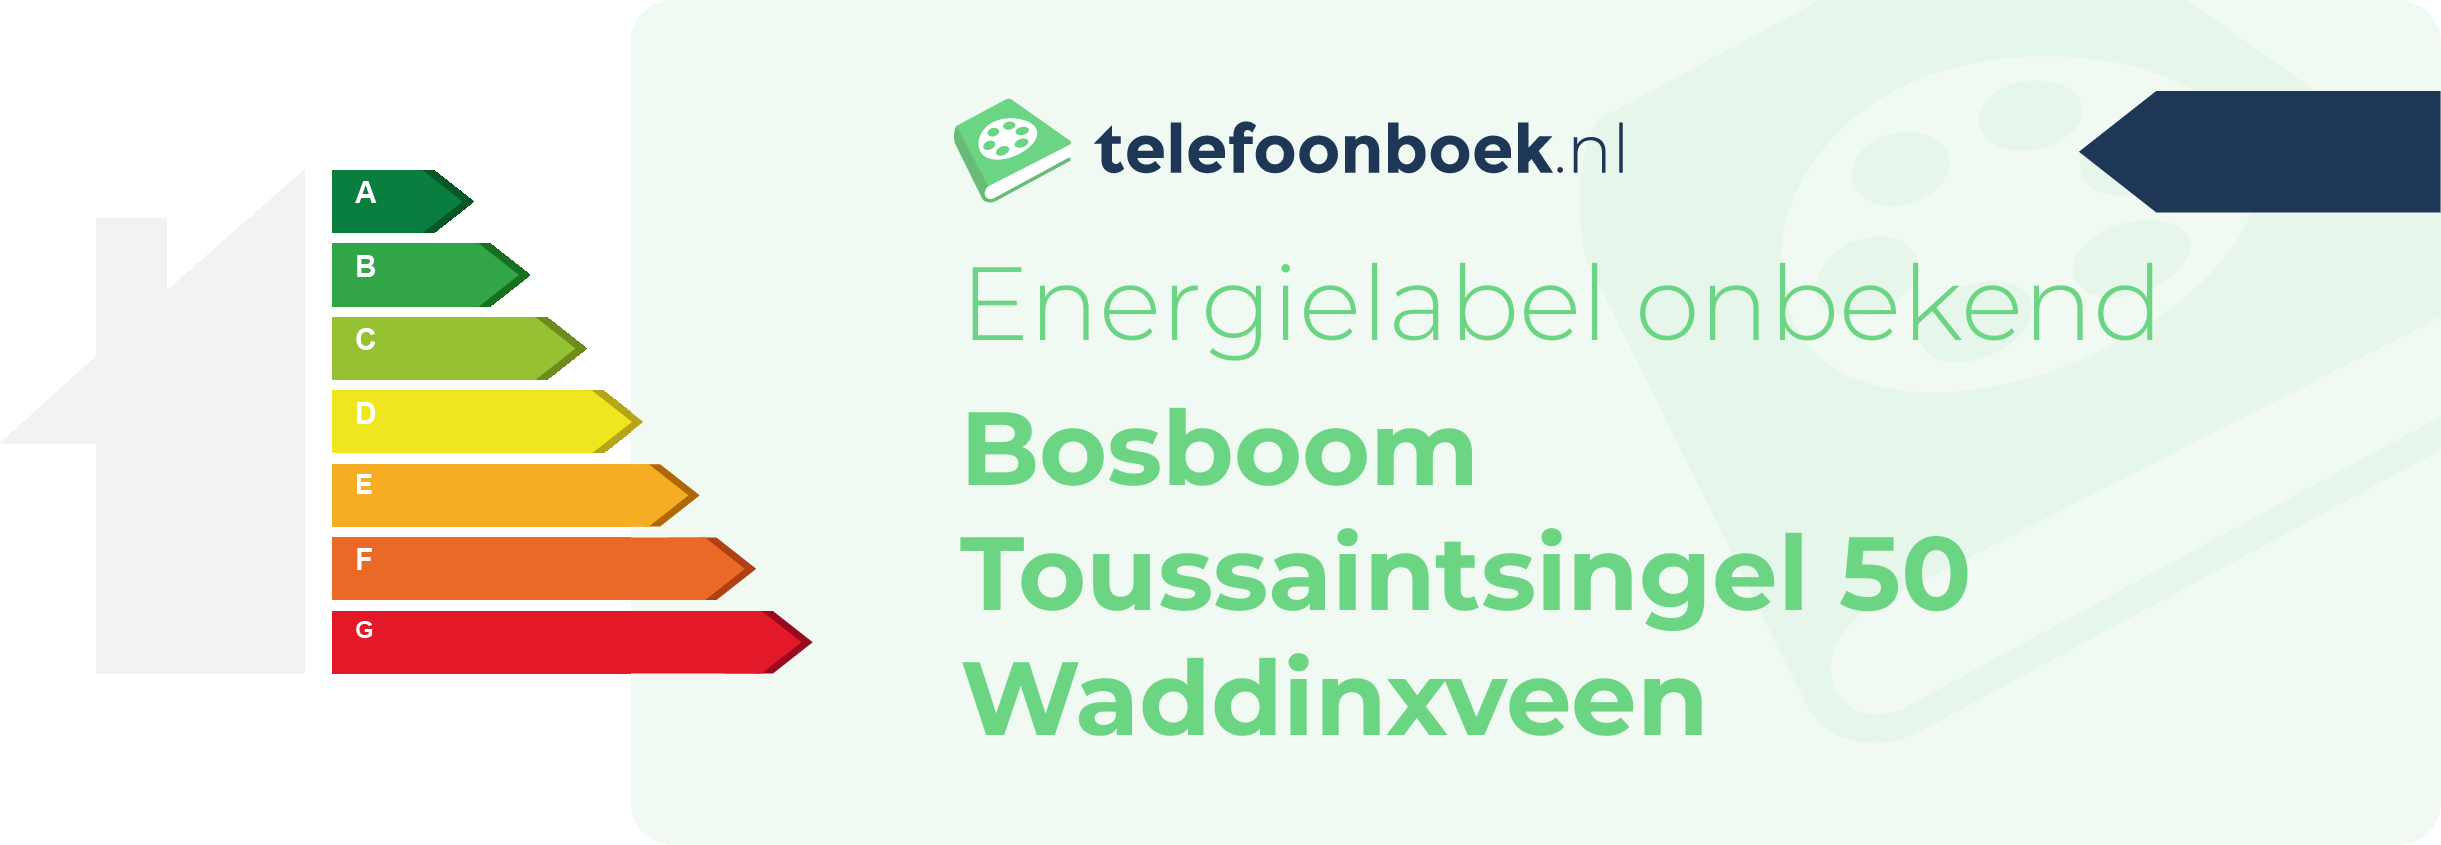 Energielabel Bosboom Toussaintsingel 50 Waddinxveen